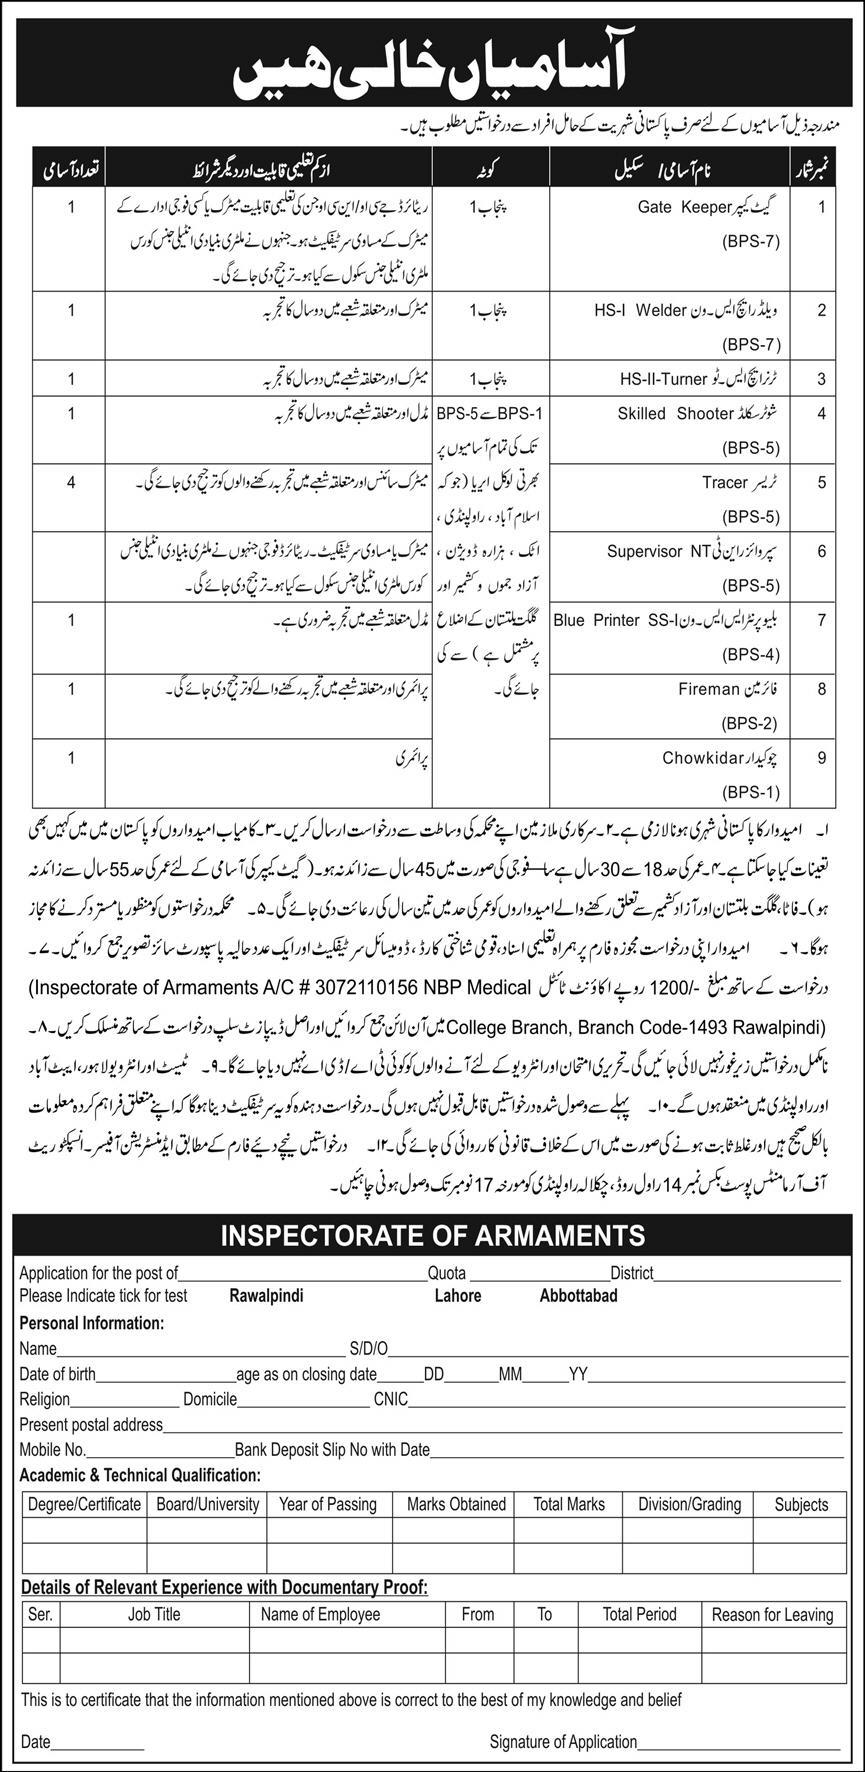 Inspectorate of Armaments Management November 2020 Jobs in Pakistan 2020 - Download Job Application Form